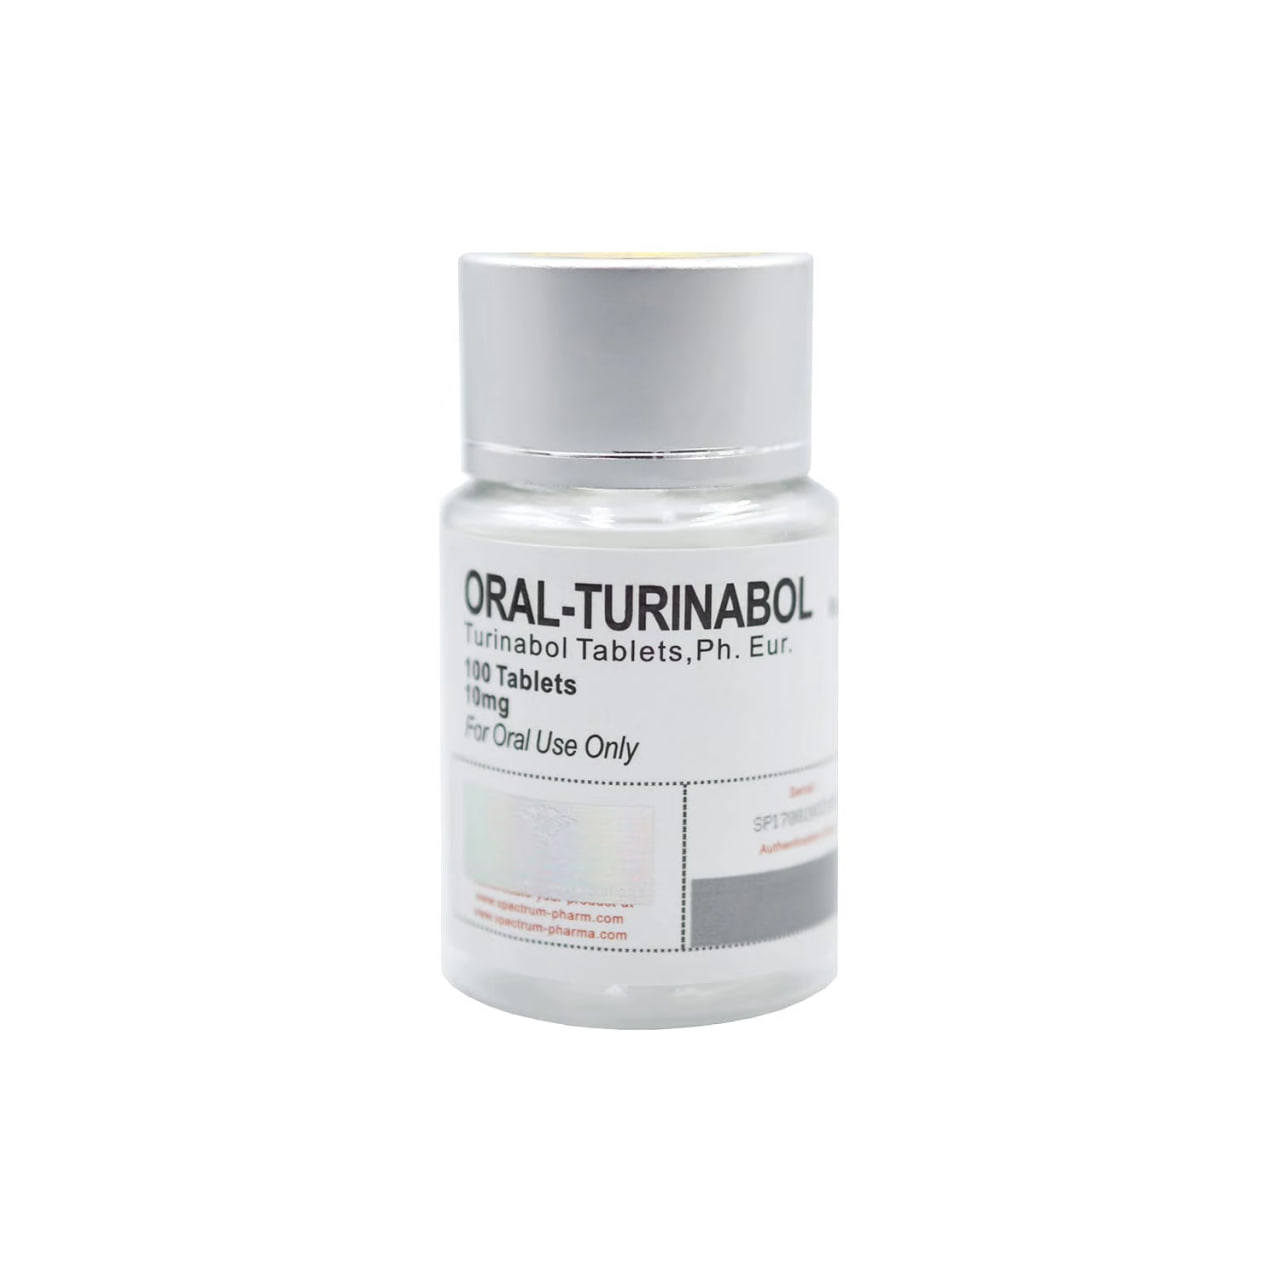 ORAL-TURINABOL (USA Domestic) Spectrum Pharma